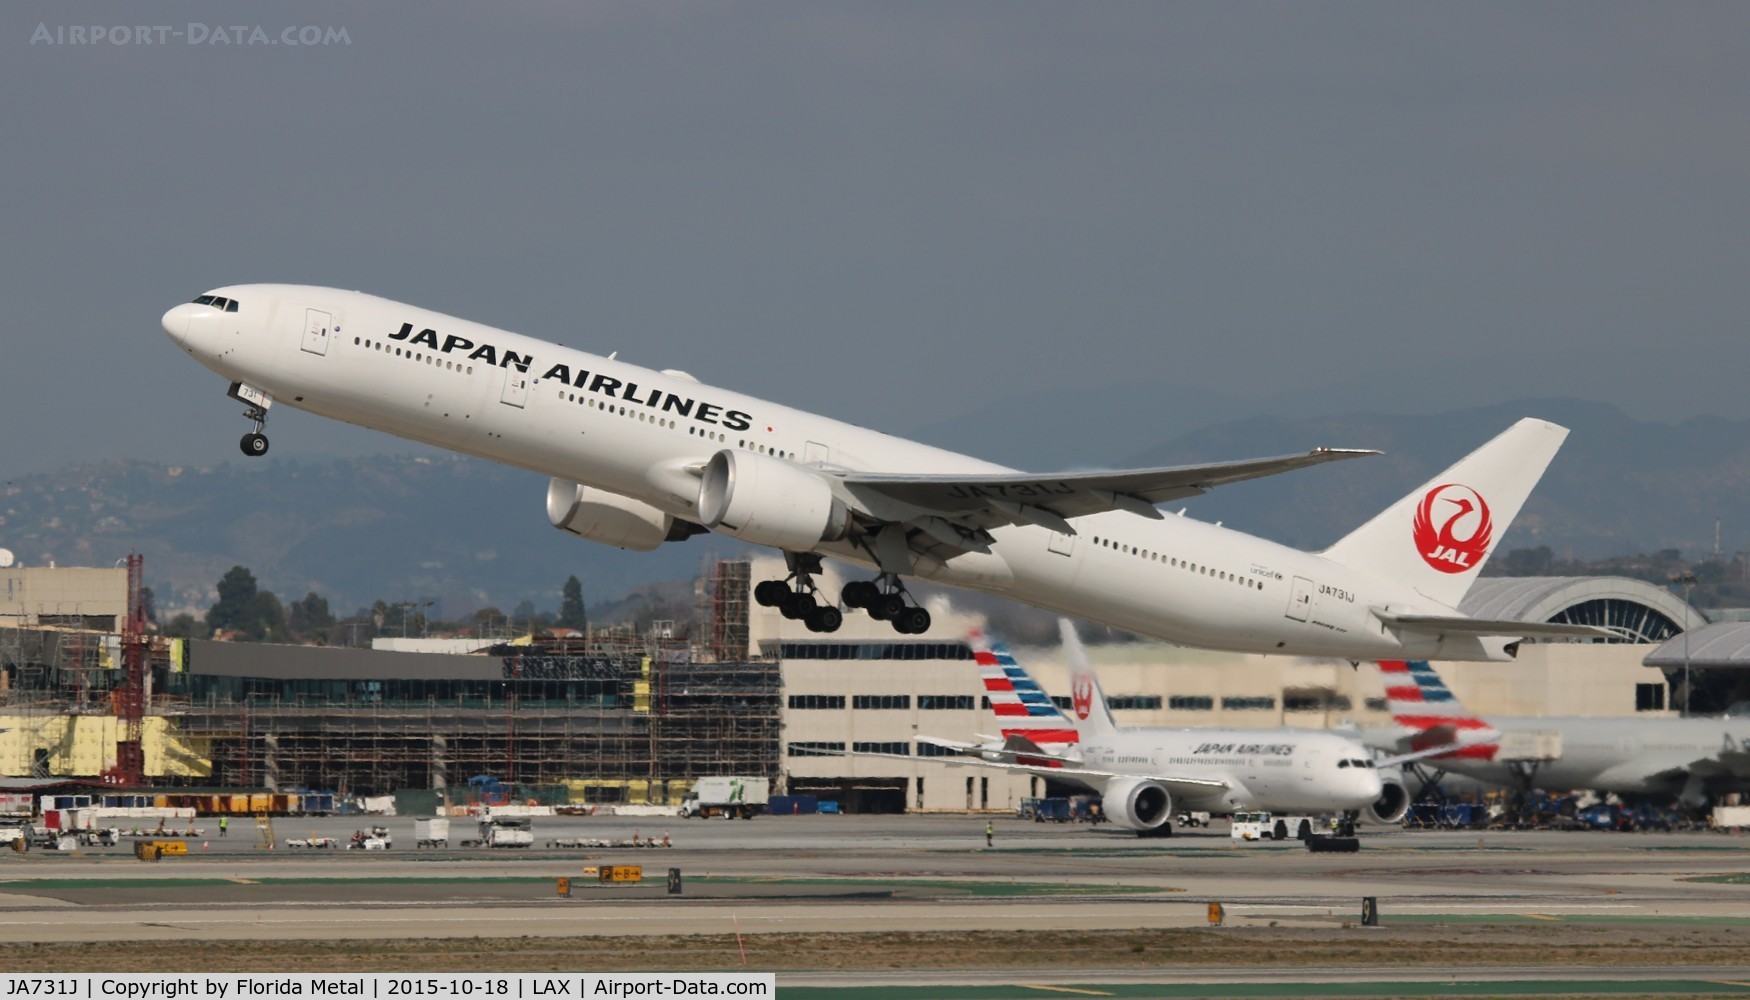 JA731J, 2003 Boeing 777-346/ER C/N 32431, Japan Airlines